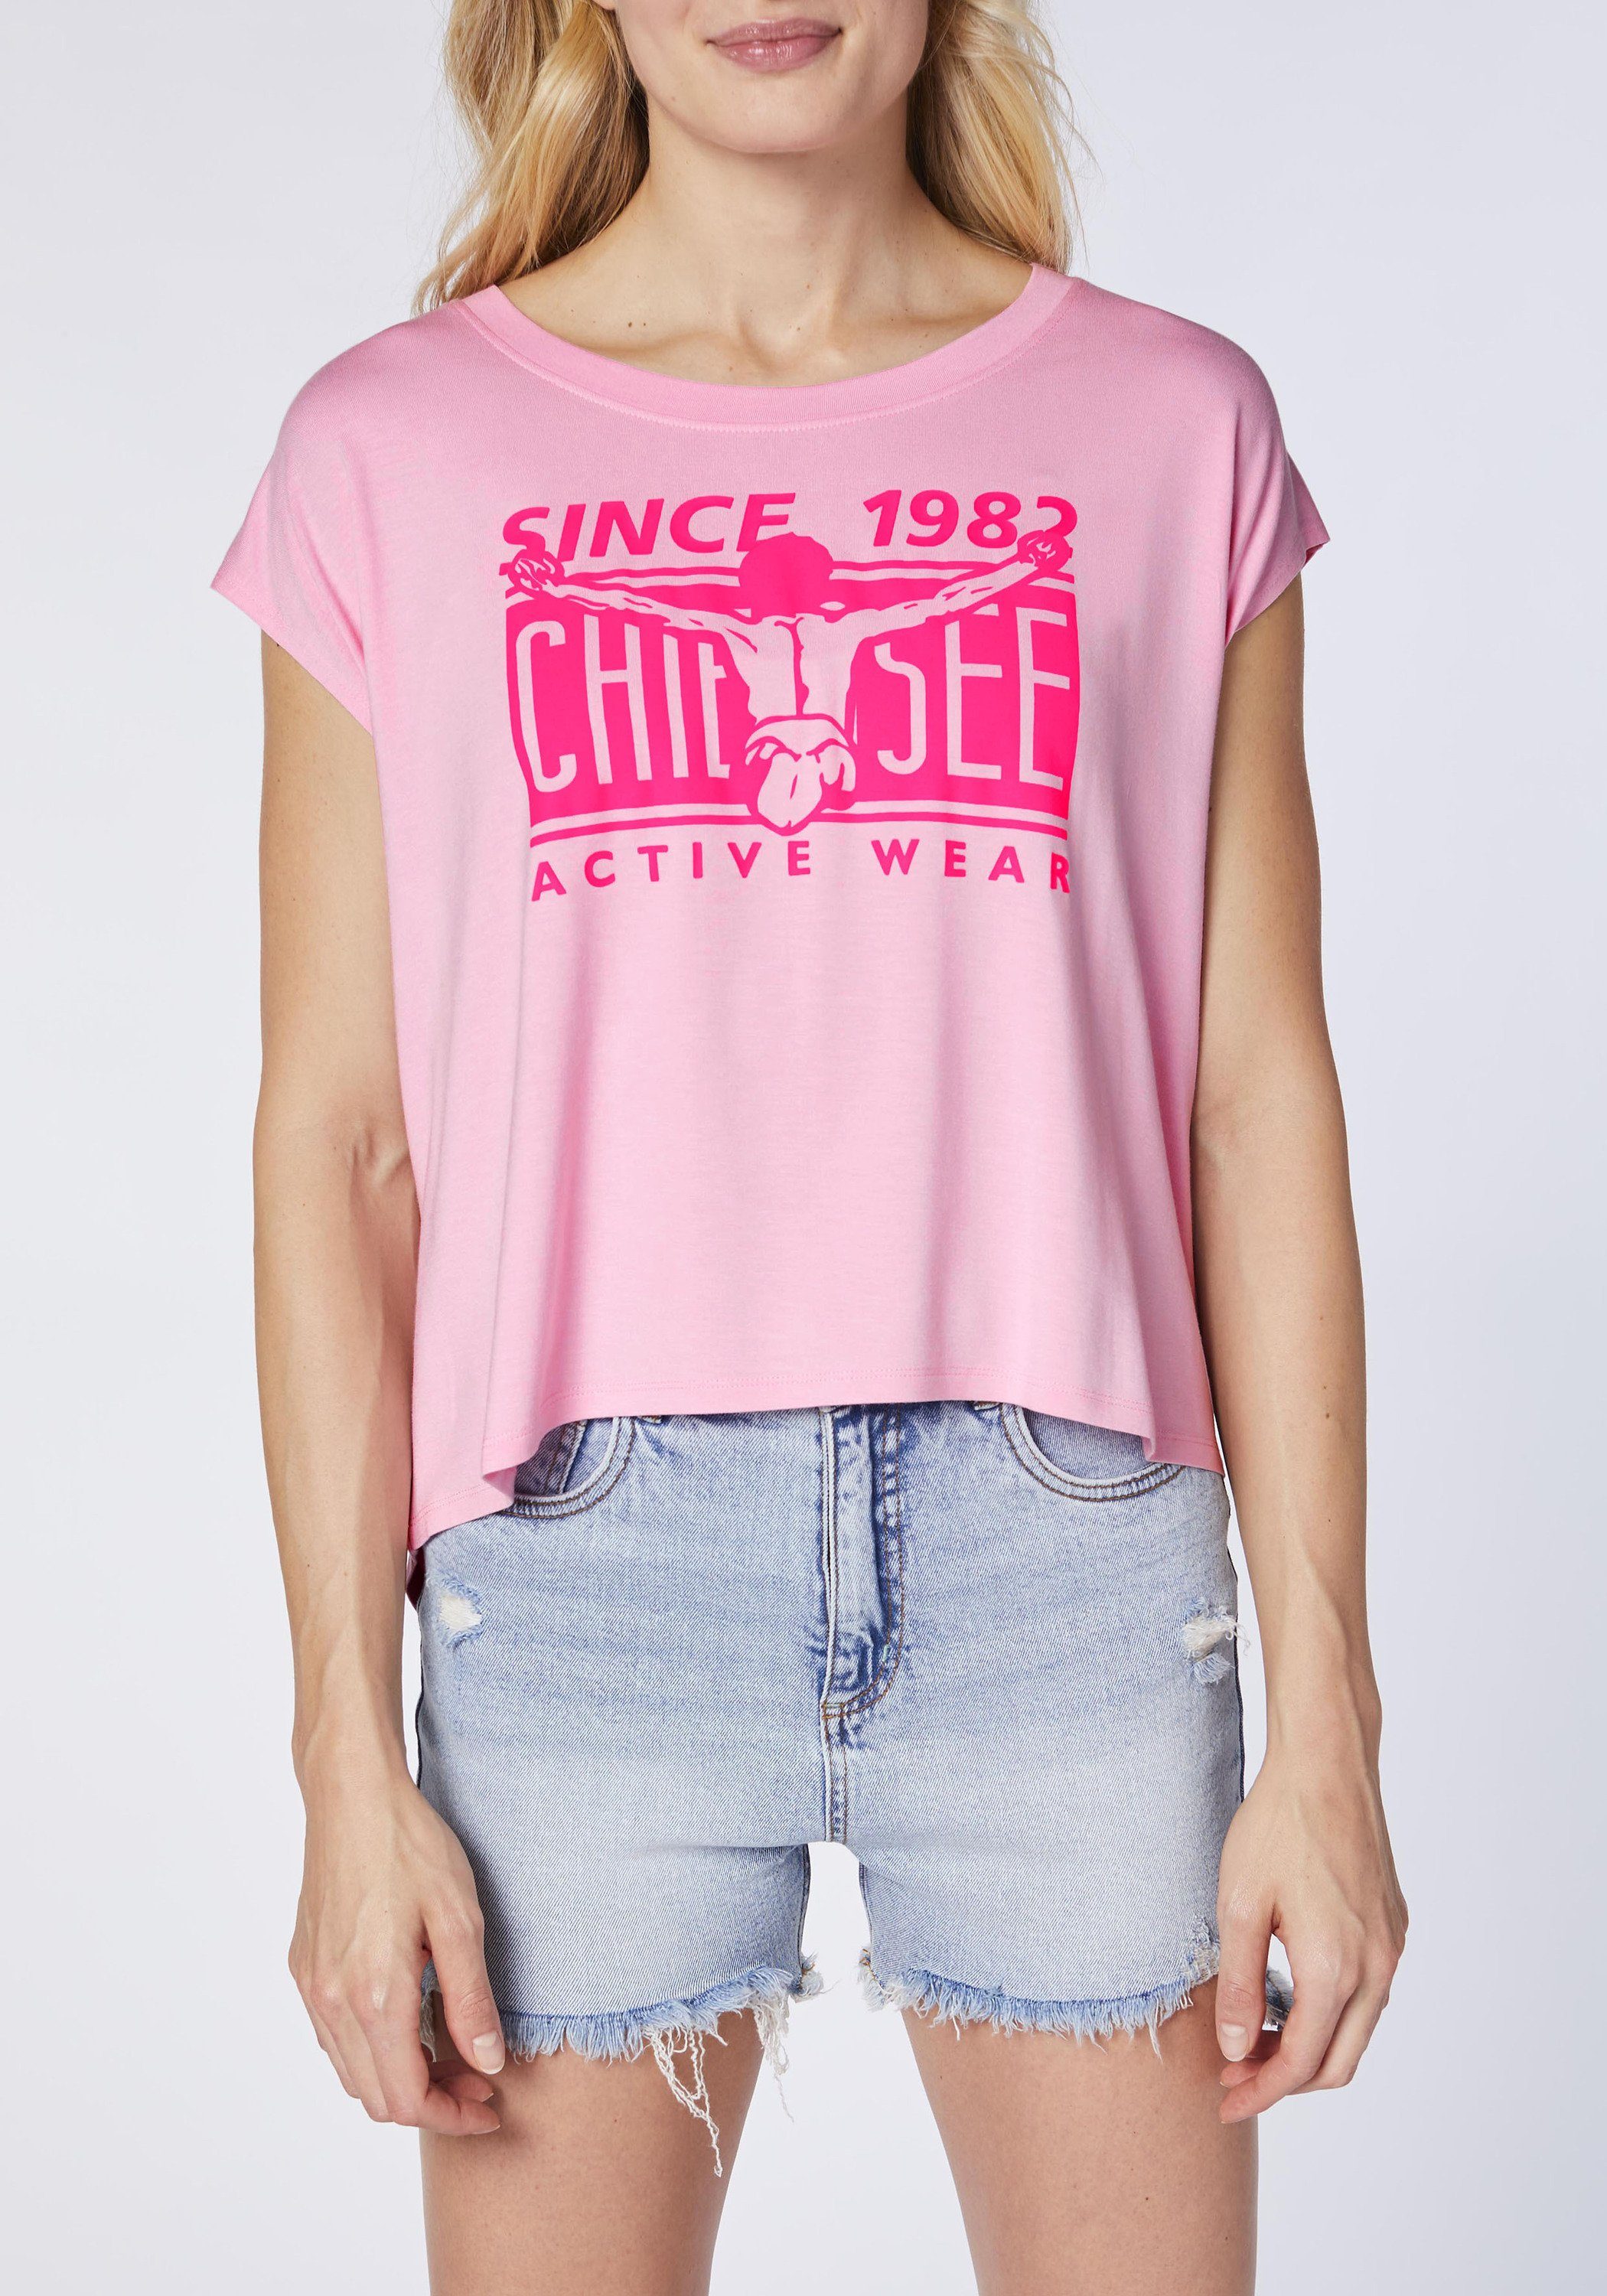 Labelprint 1 Pink mit Prism aus Chiemsee Print-Shirt Viskose-Elasthanmix T-Shirt